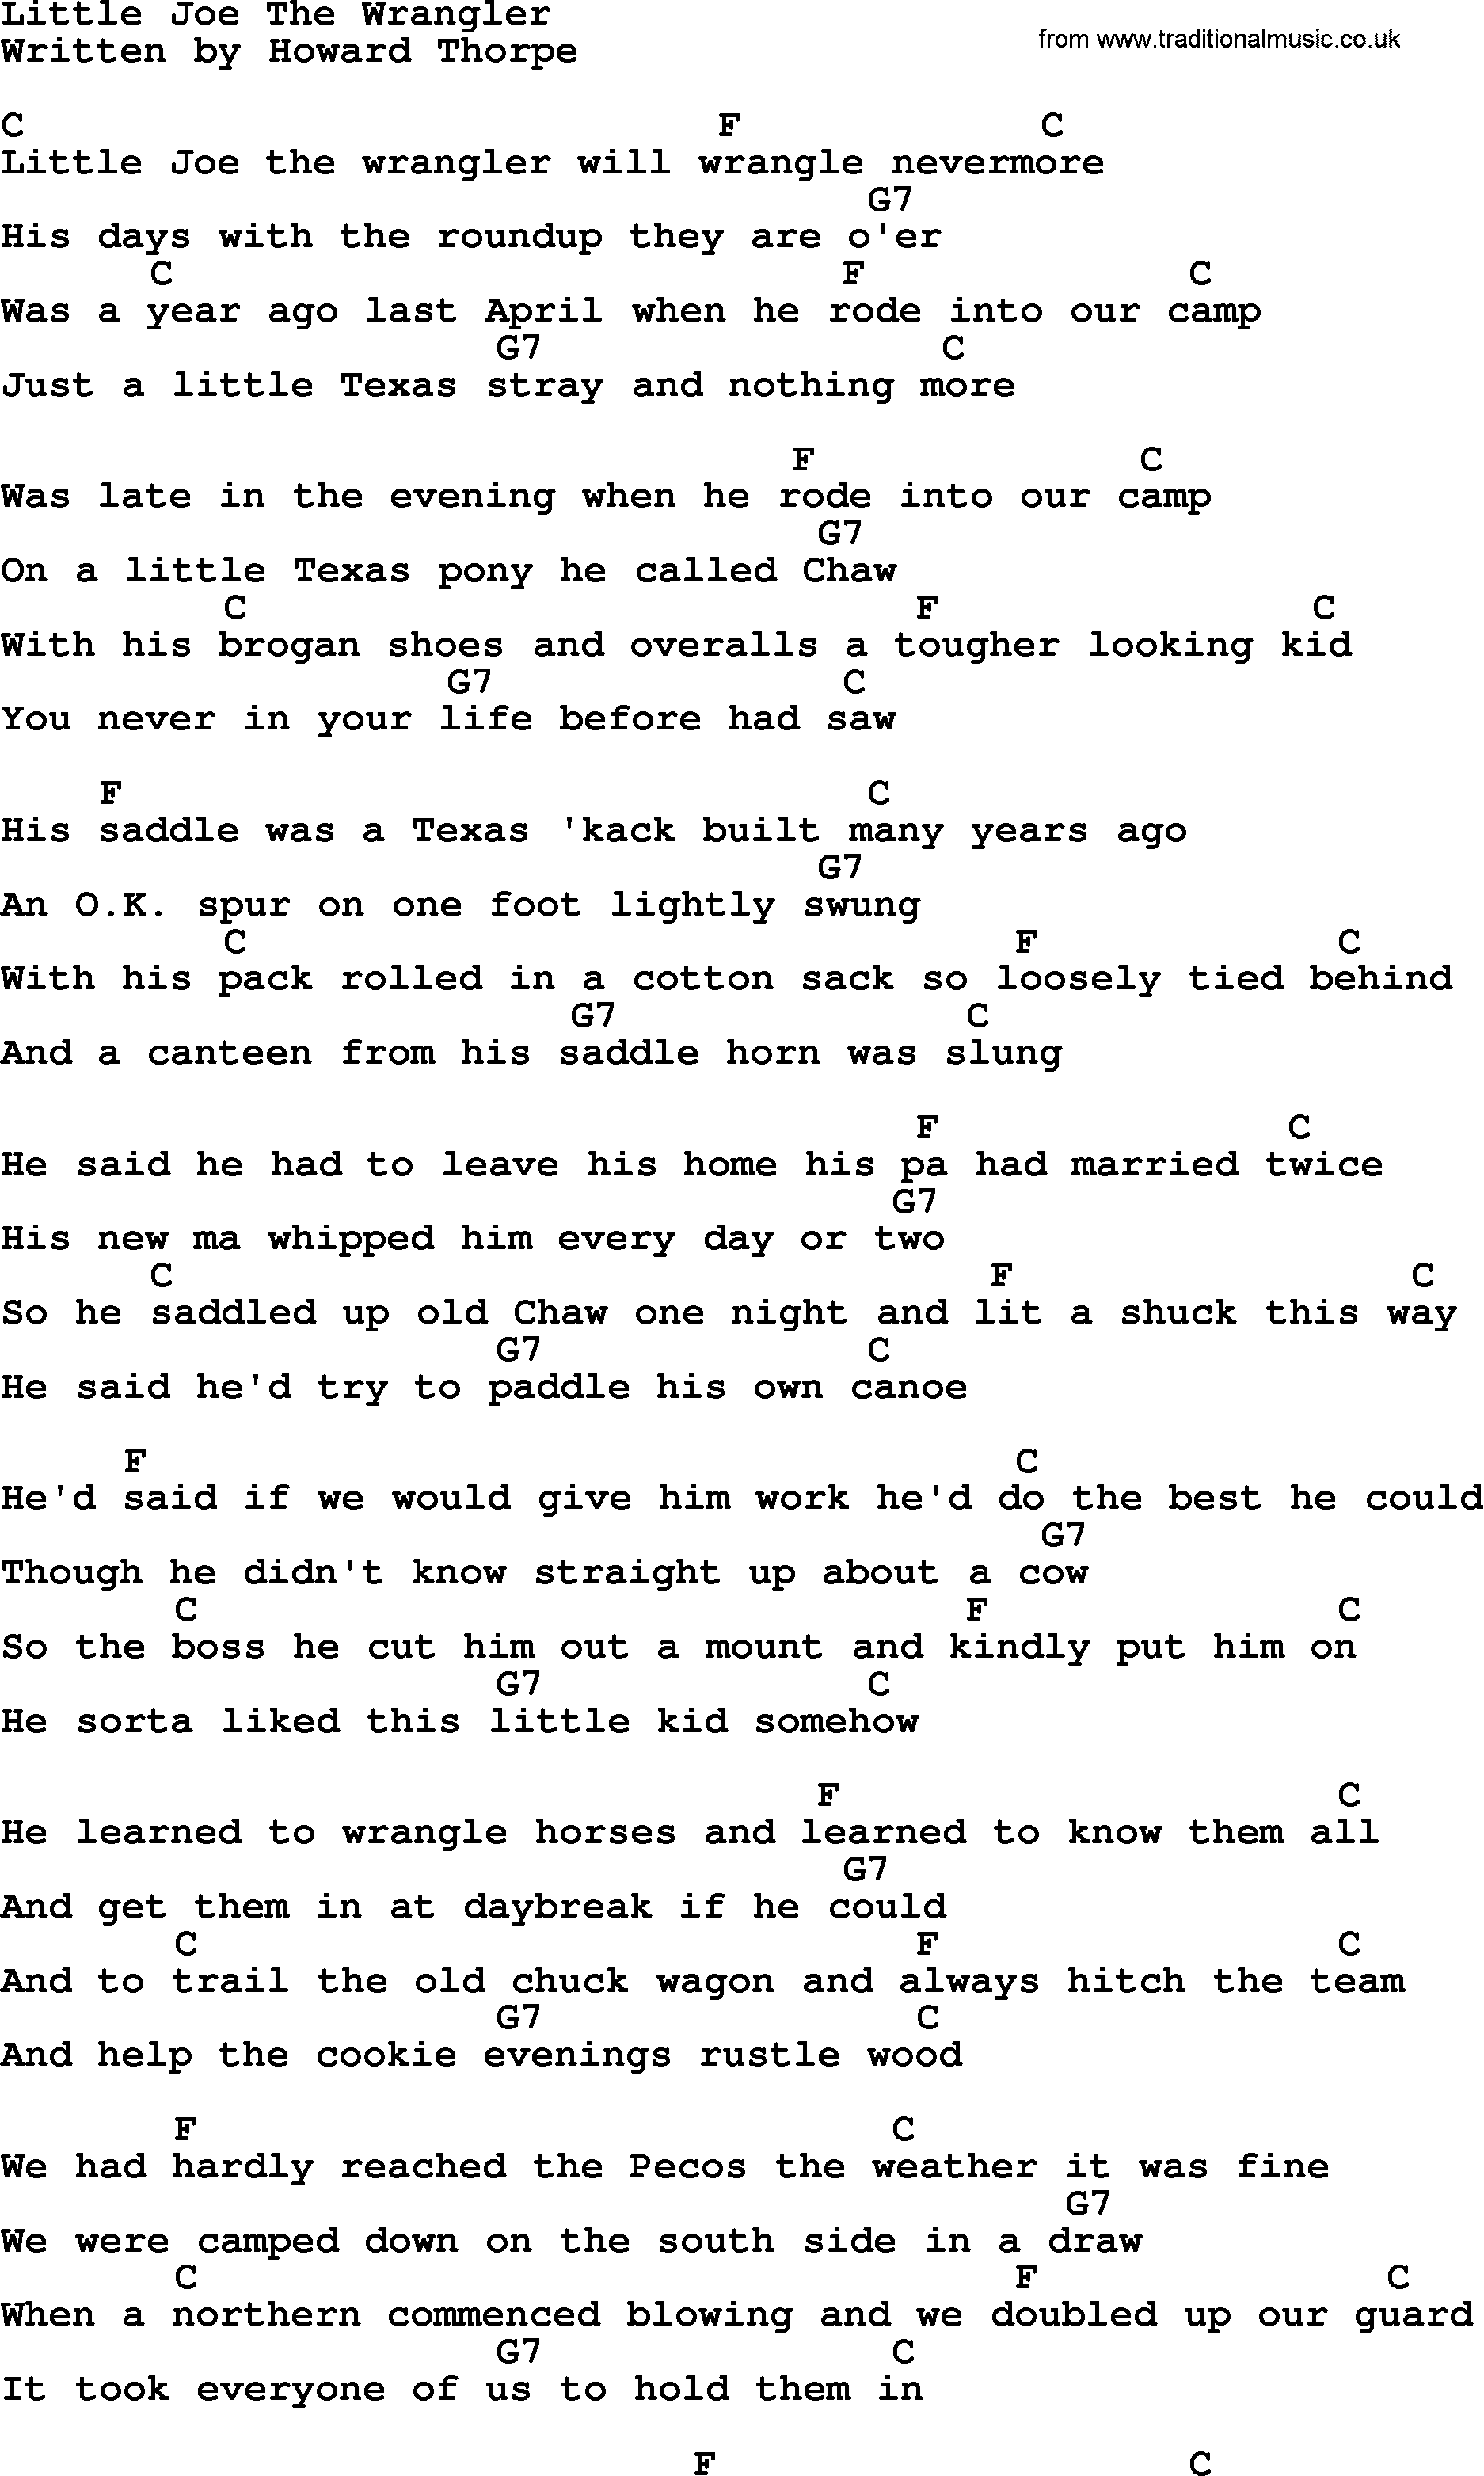 Little Joe The Wrangler, by Marty Robbins - lyrics and chords